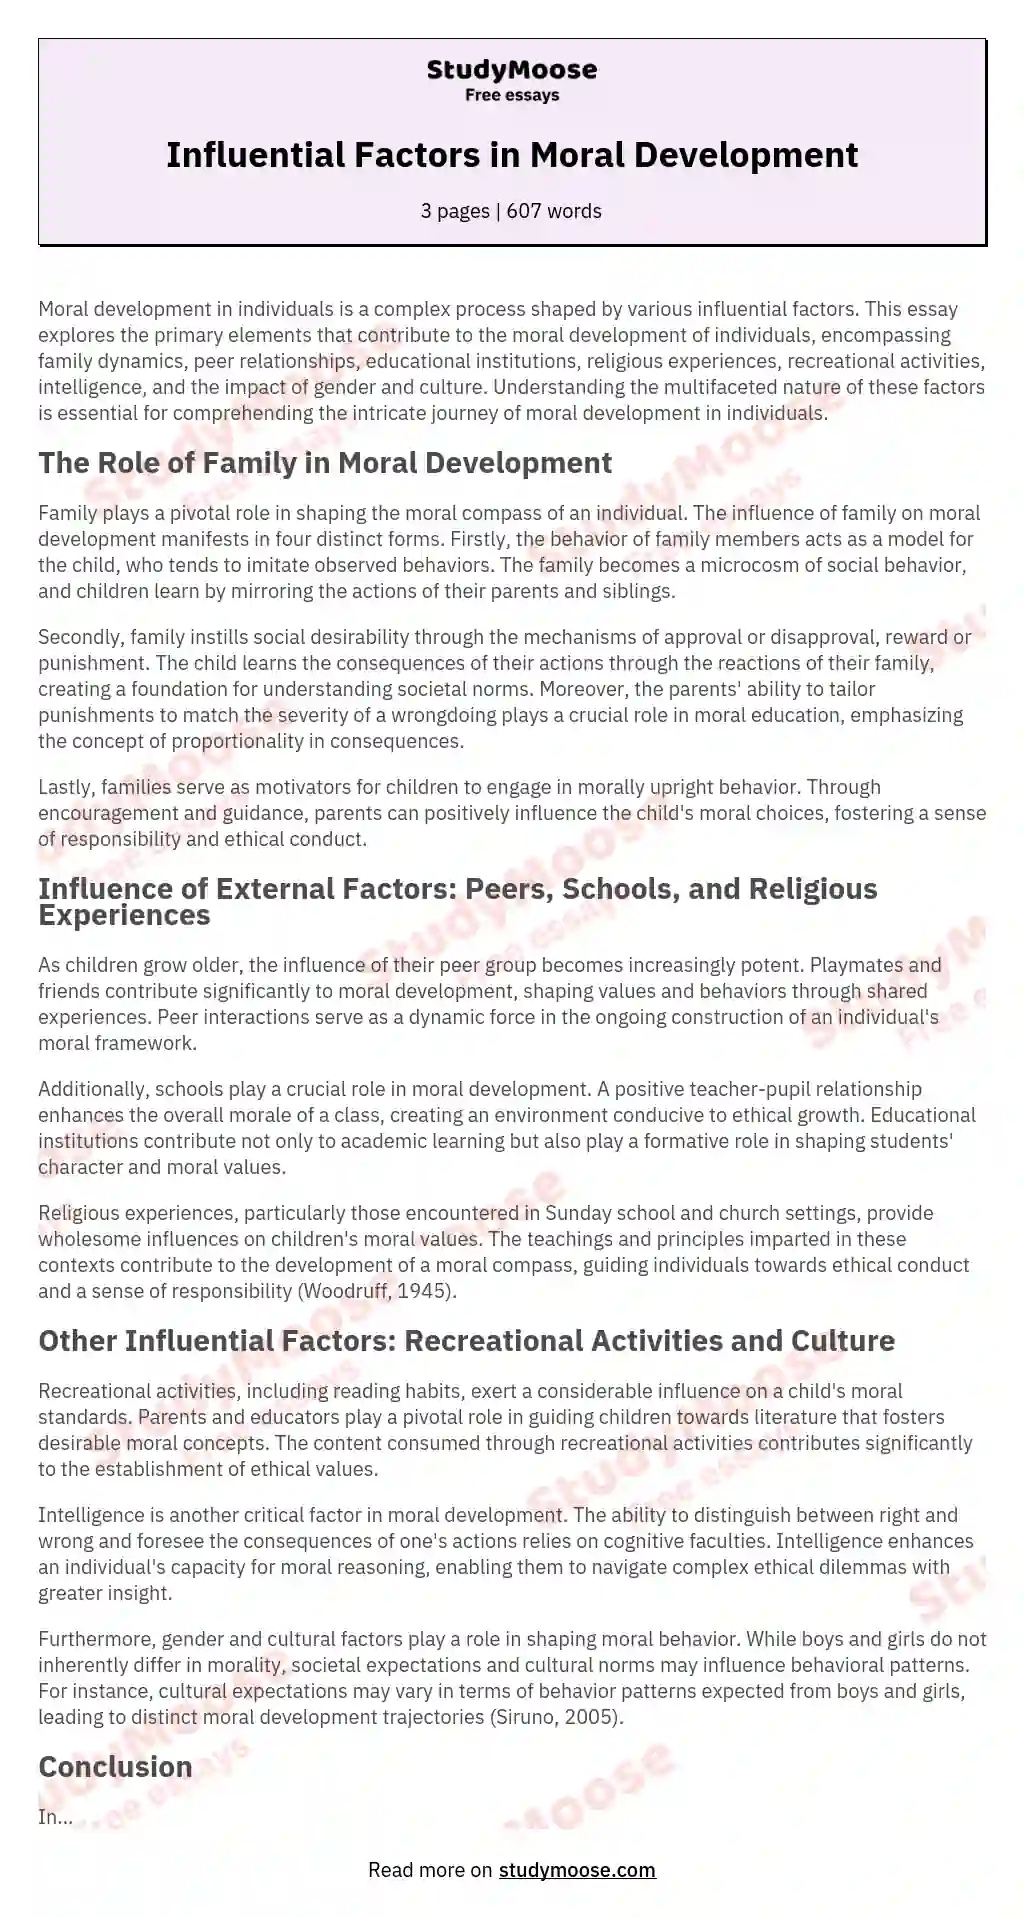 Influential Factors in Moral Development essay